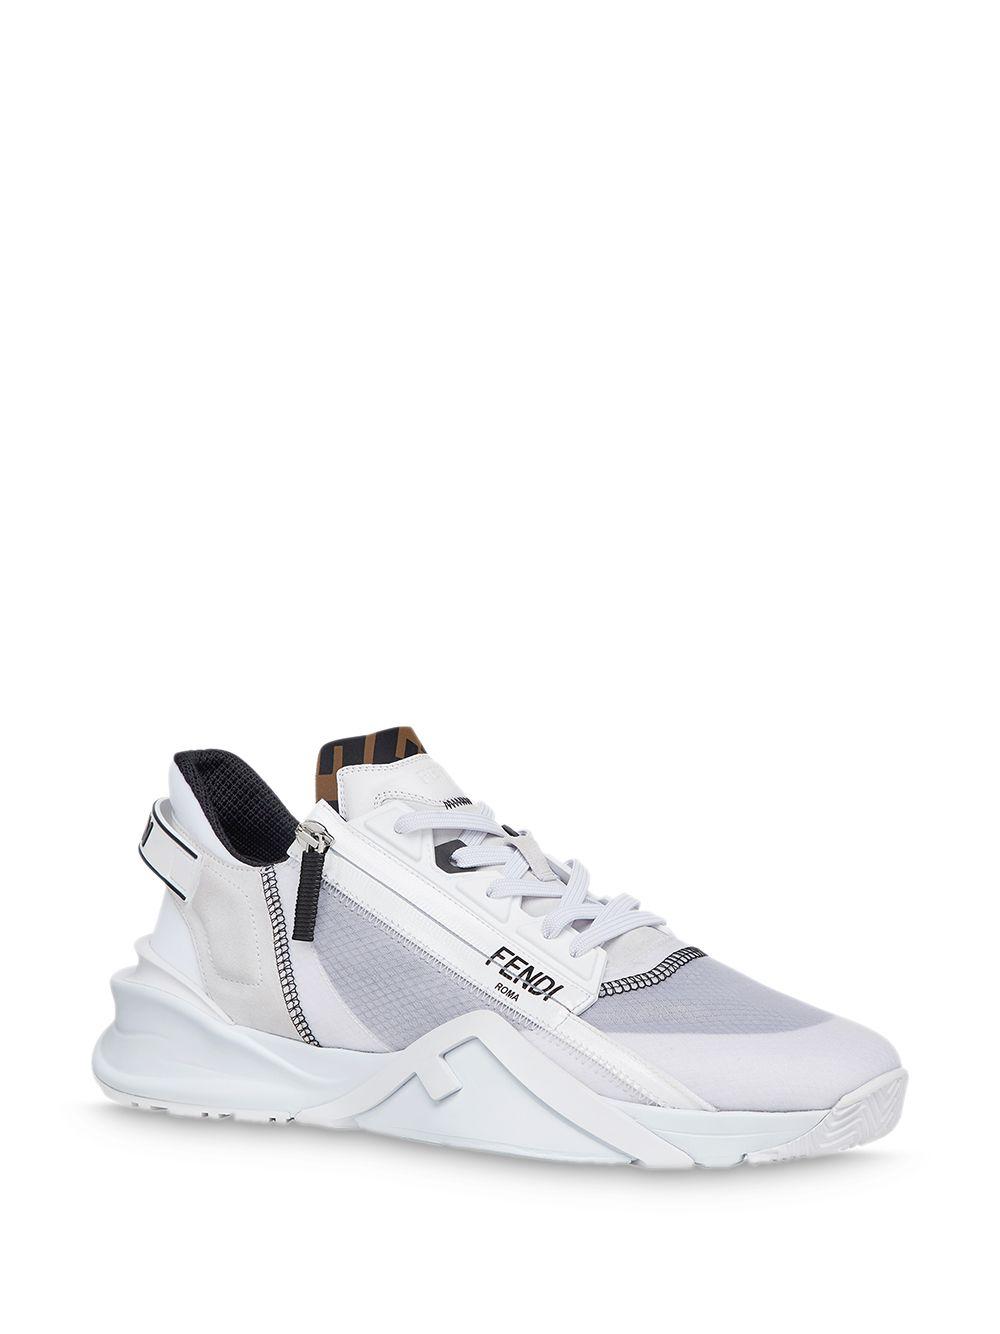 Fendi Zip Running Style Sneakers in White for Men | Lyst